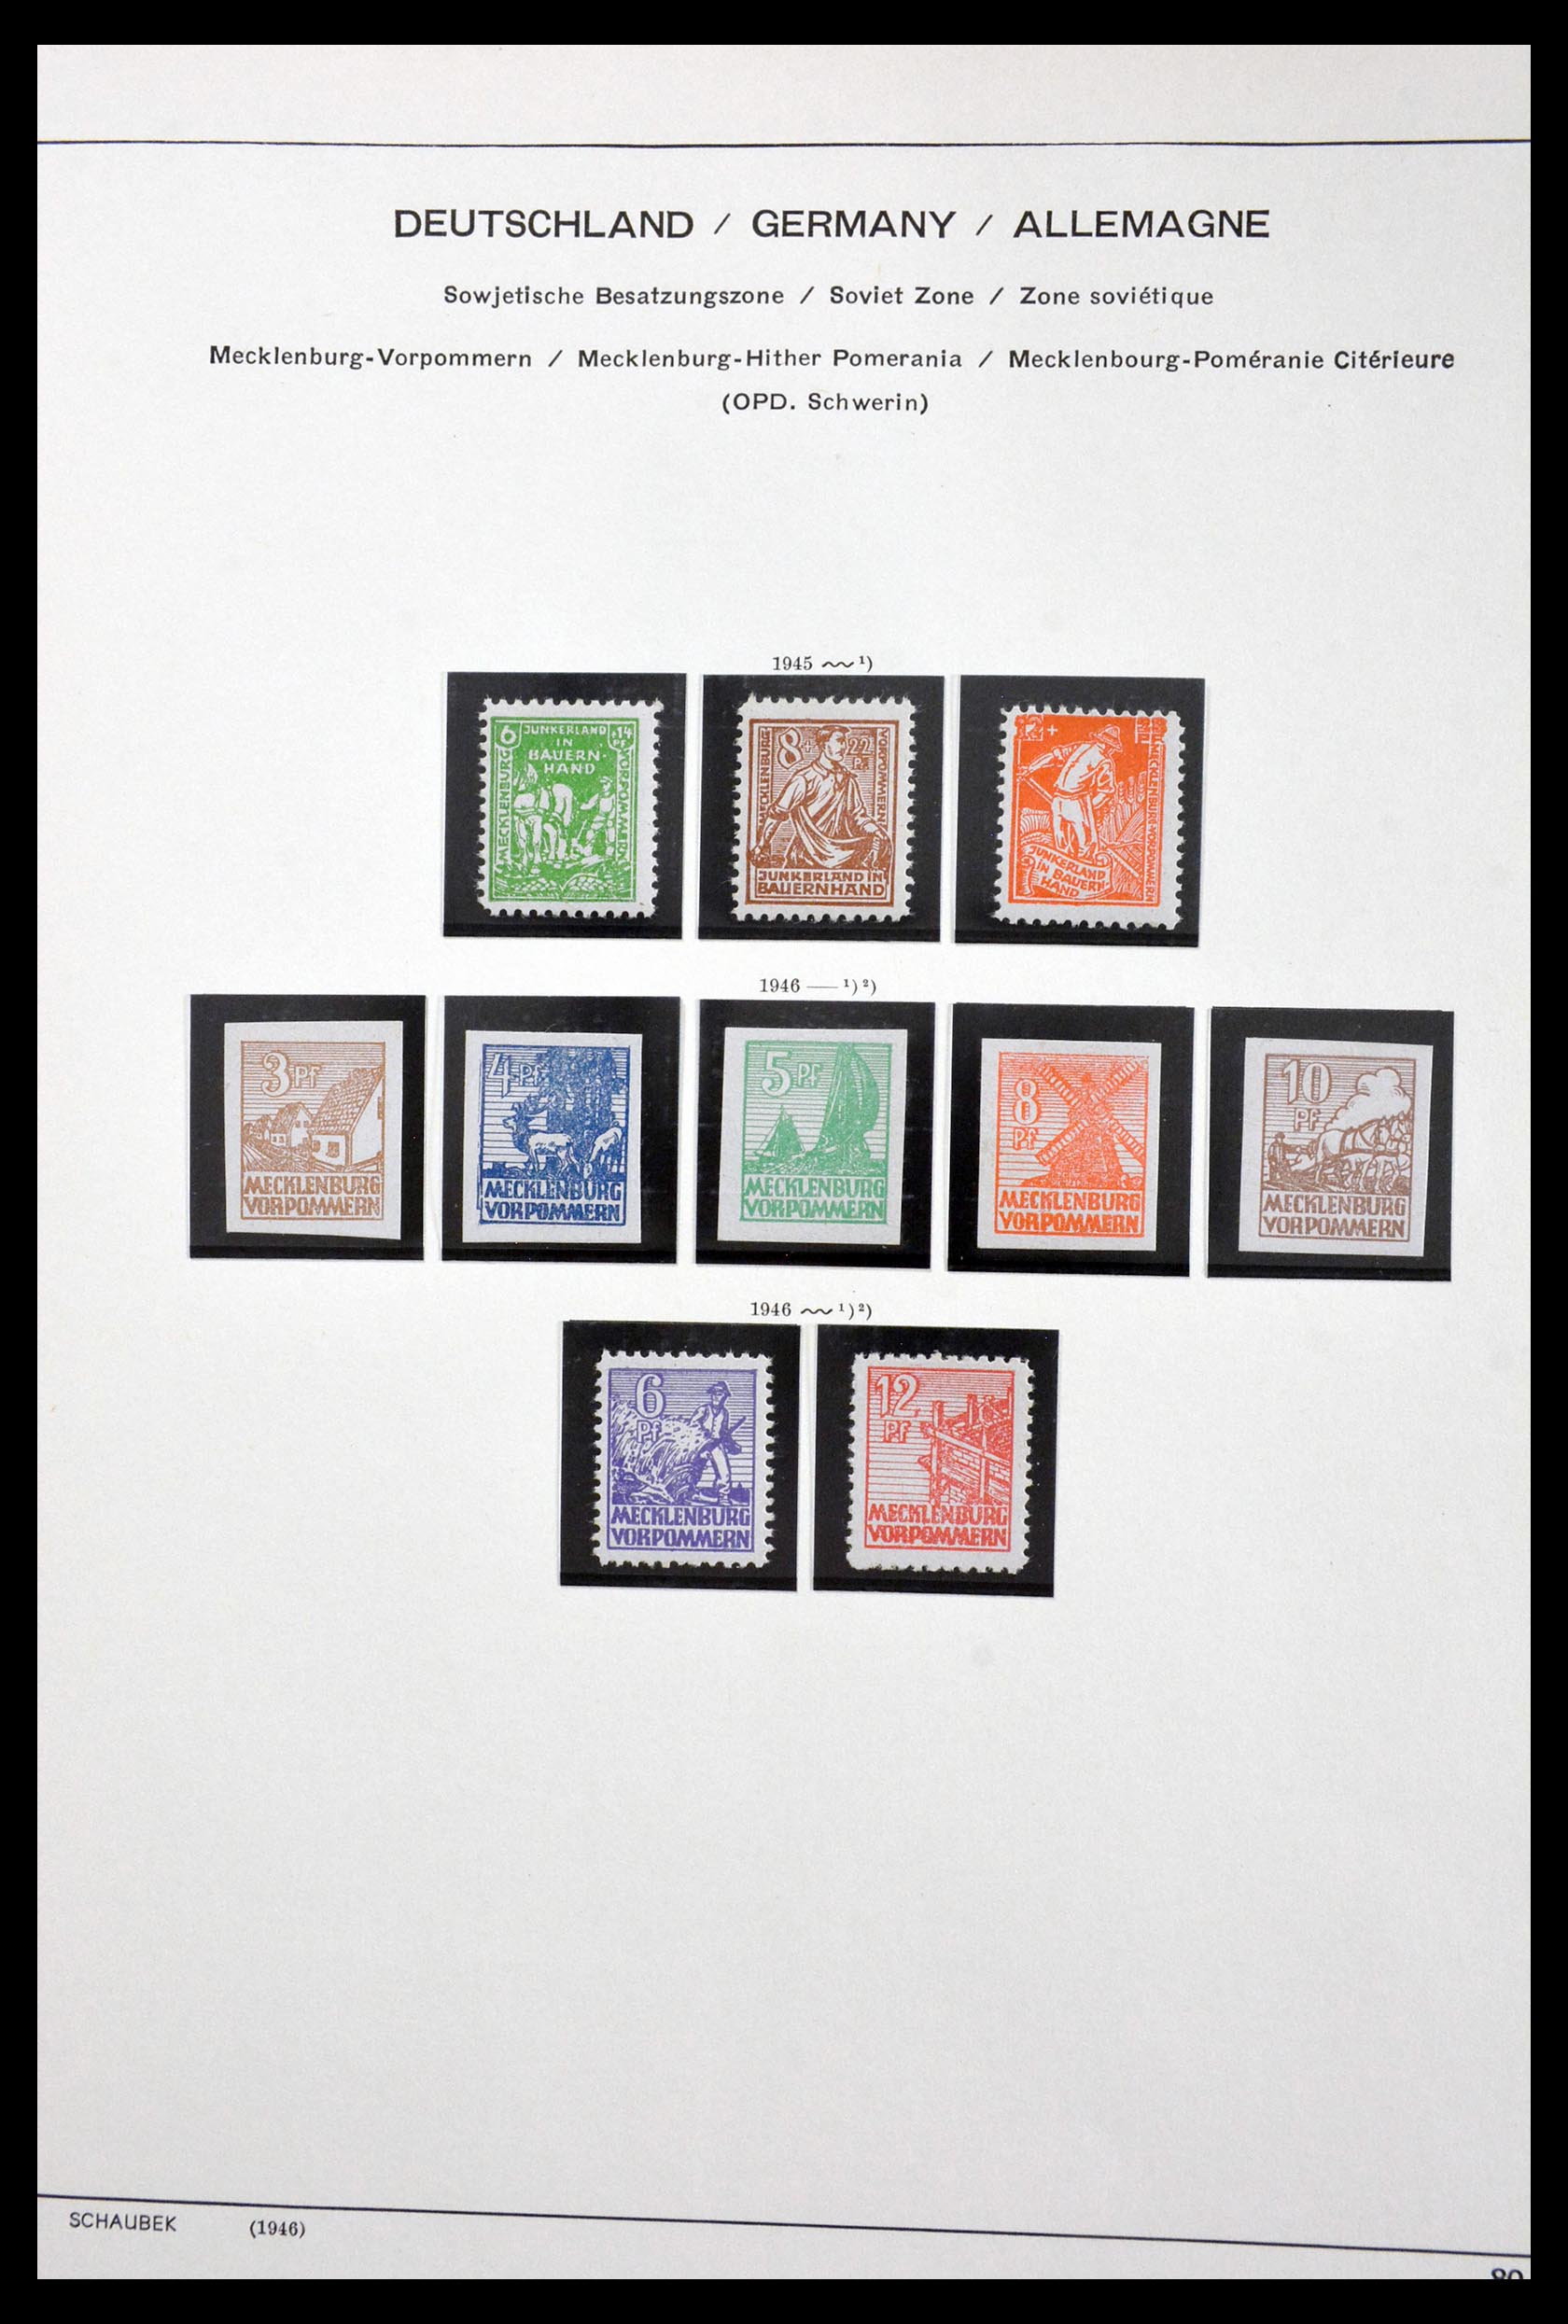 29731 027 - 29731 Local stamps Sovjetzone 1945-1949.